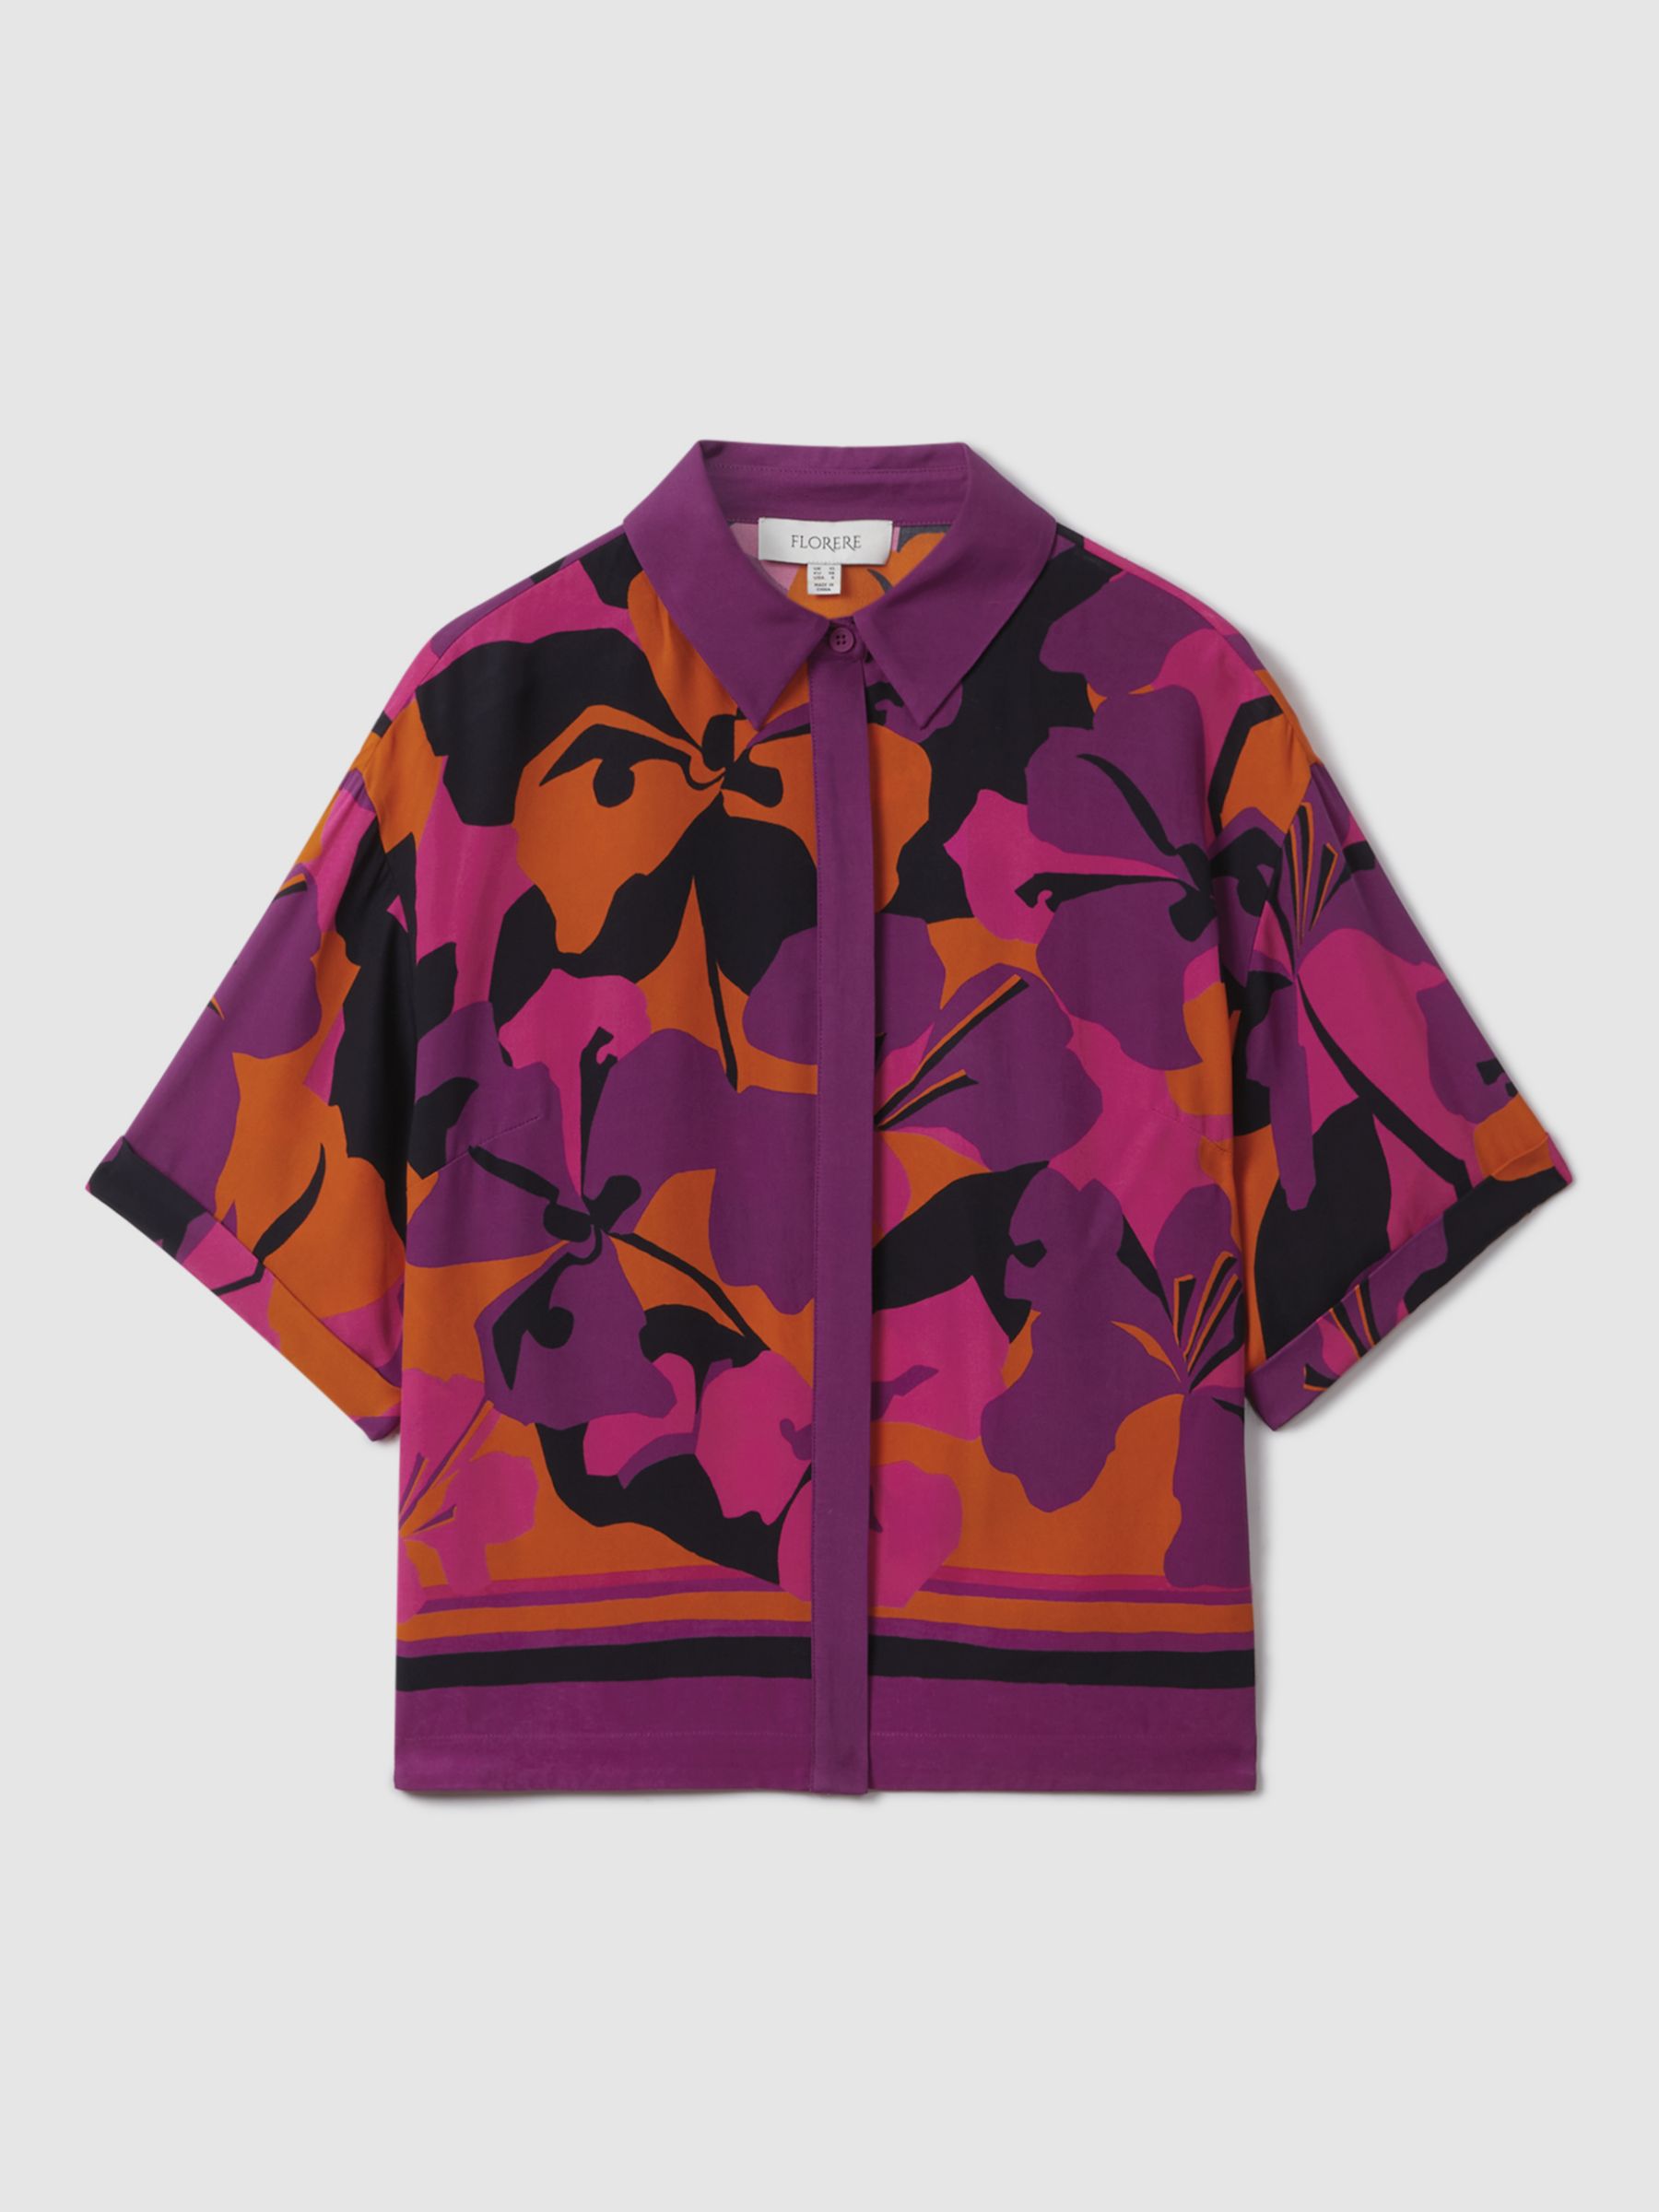 FLORERE Short Sleeve Shirt, Pink/Orange, 8